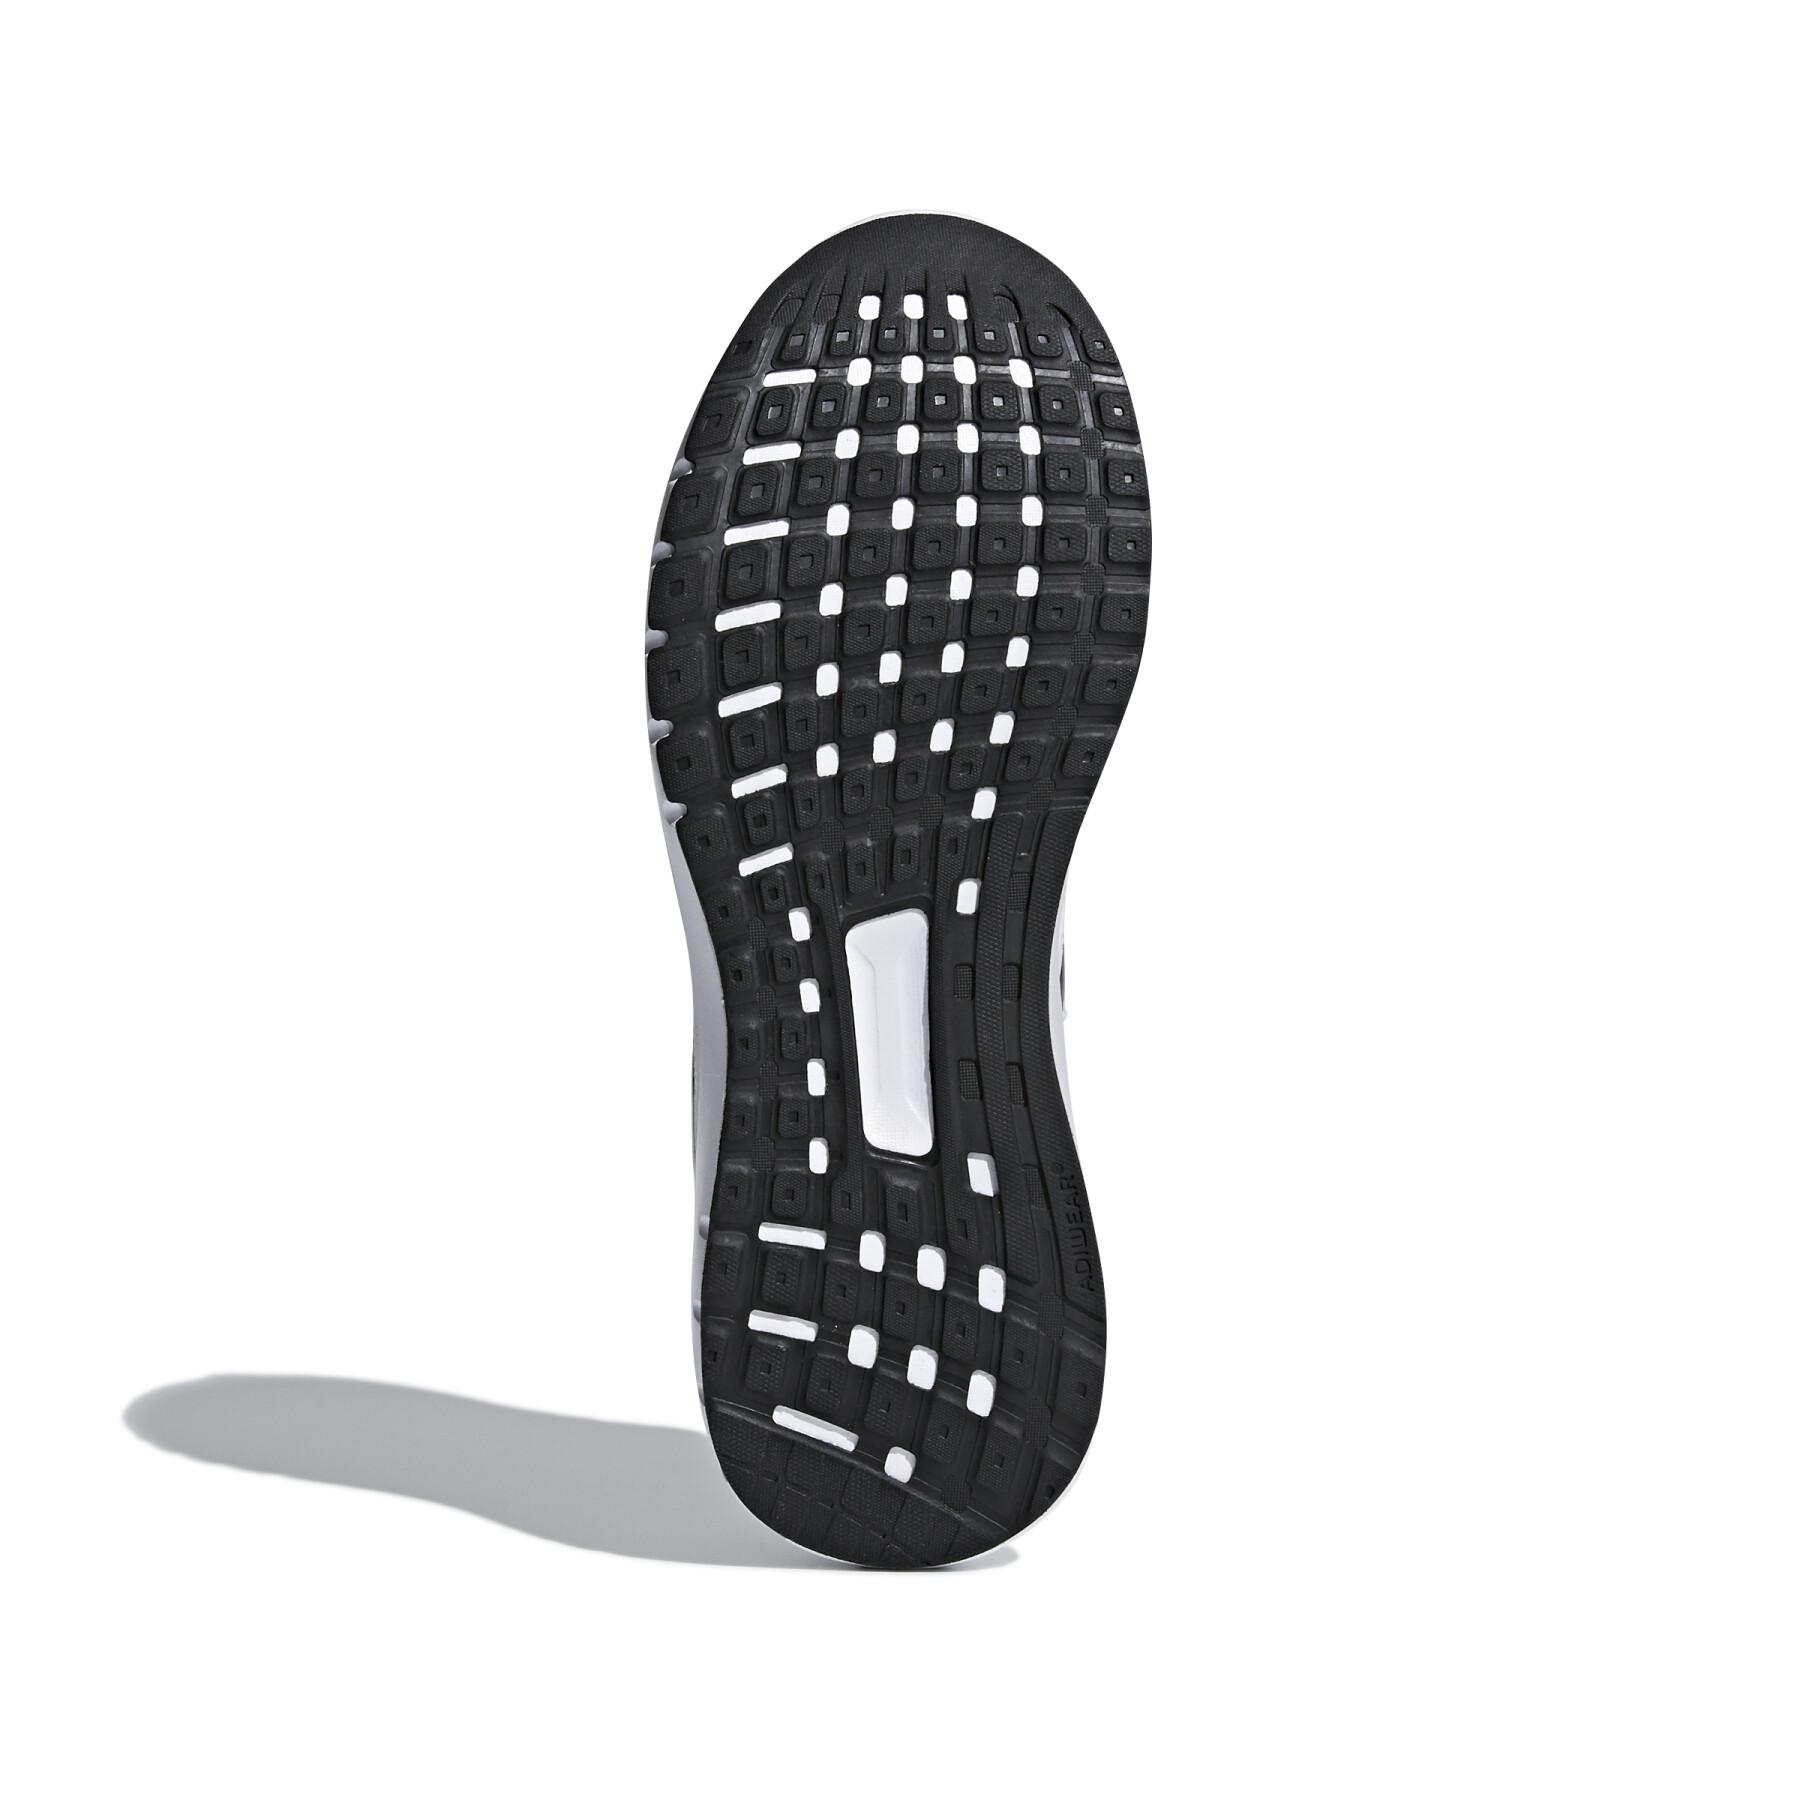 Chaussures de running adidas Duramo Lite 2.0